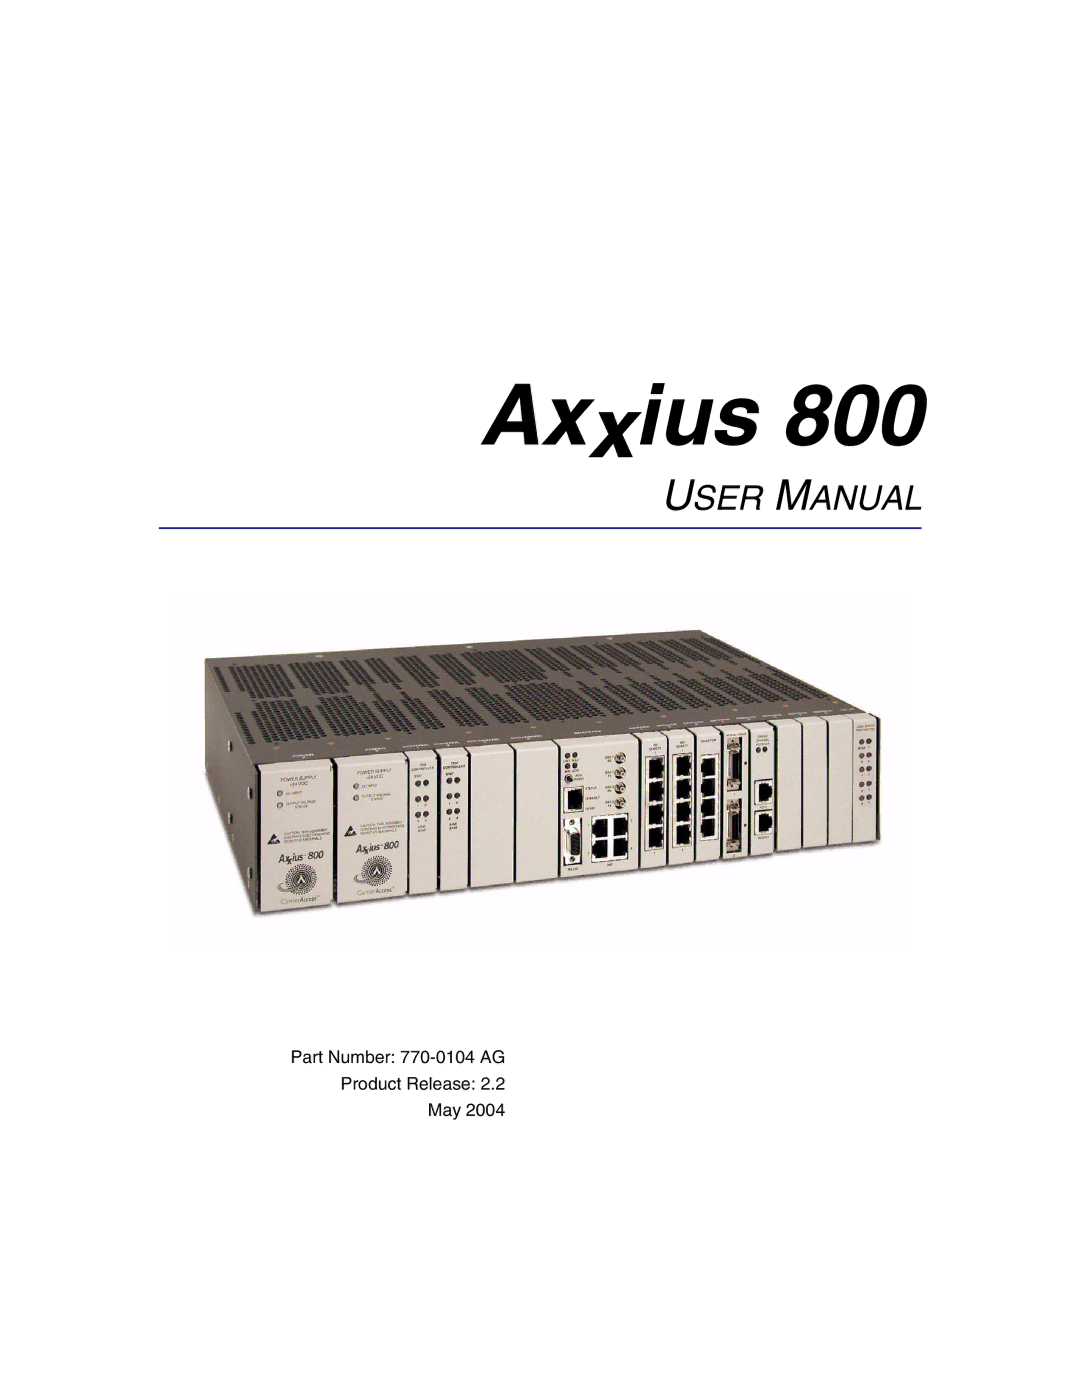 Carrier Access Axxius 800 user manual 